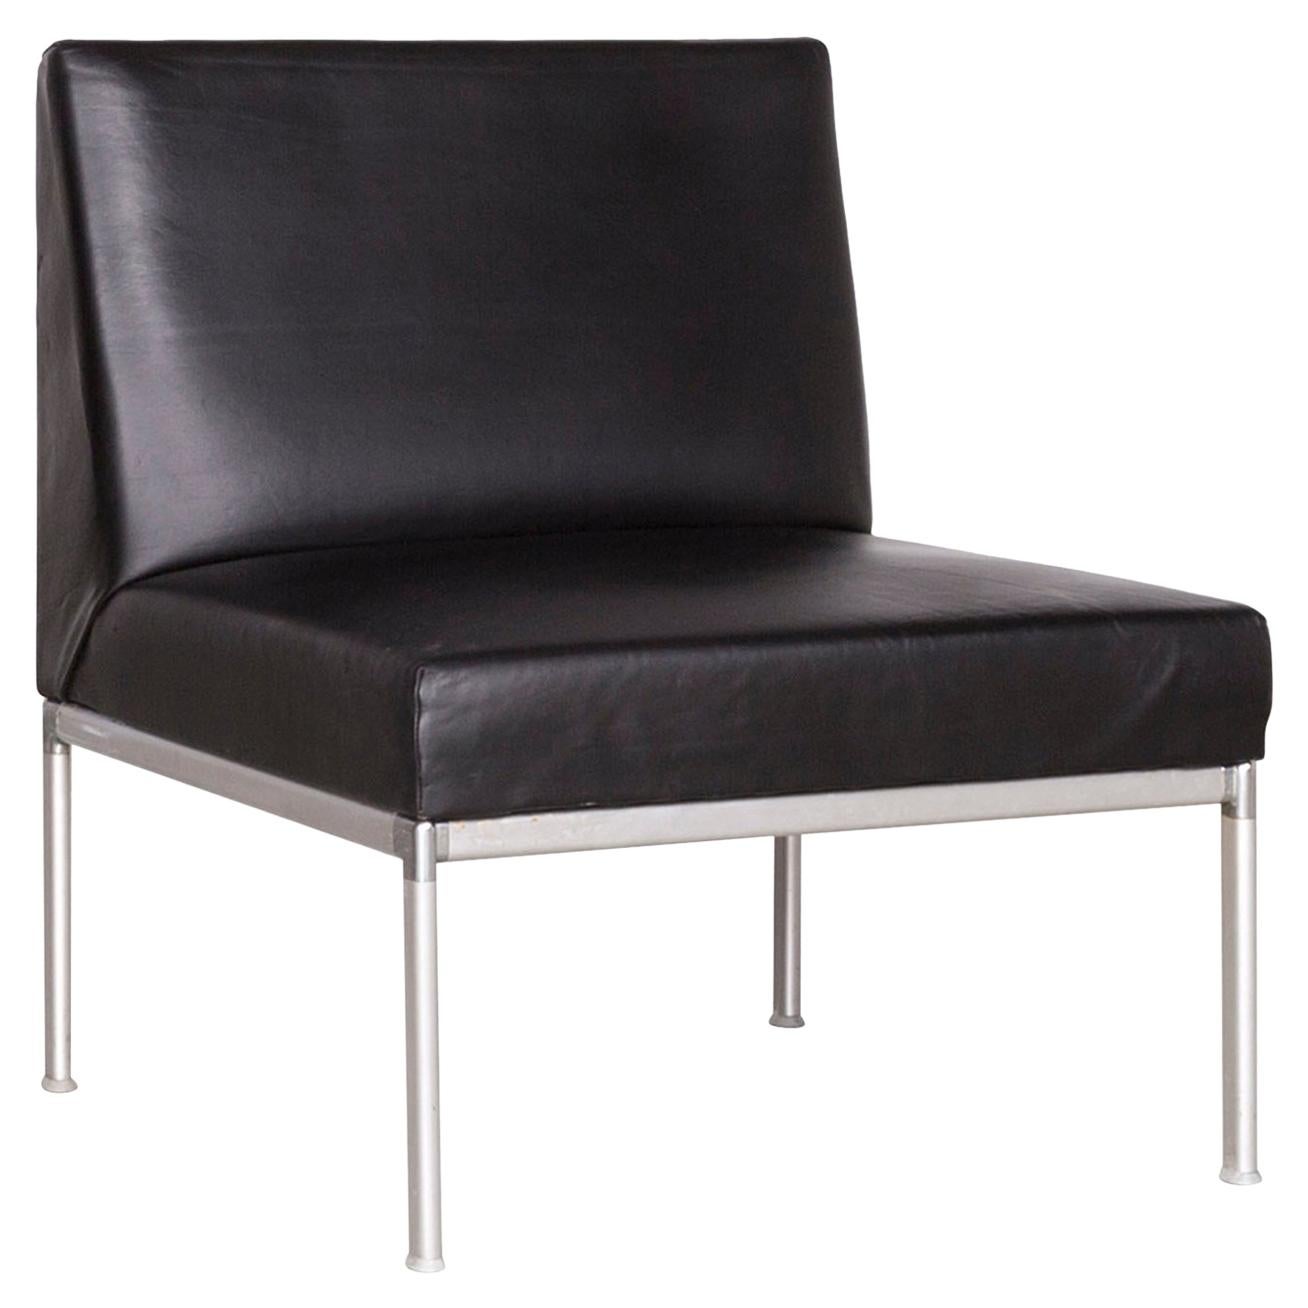 Interlübke Designer Leather Chair Black For Sale